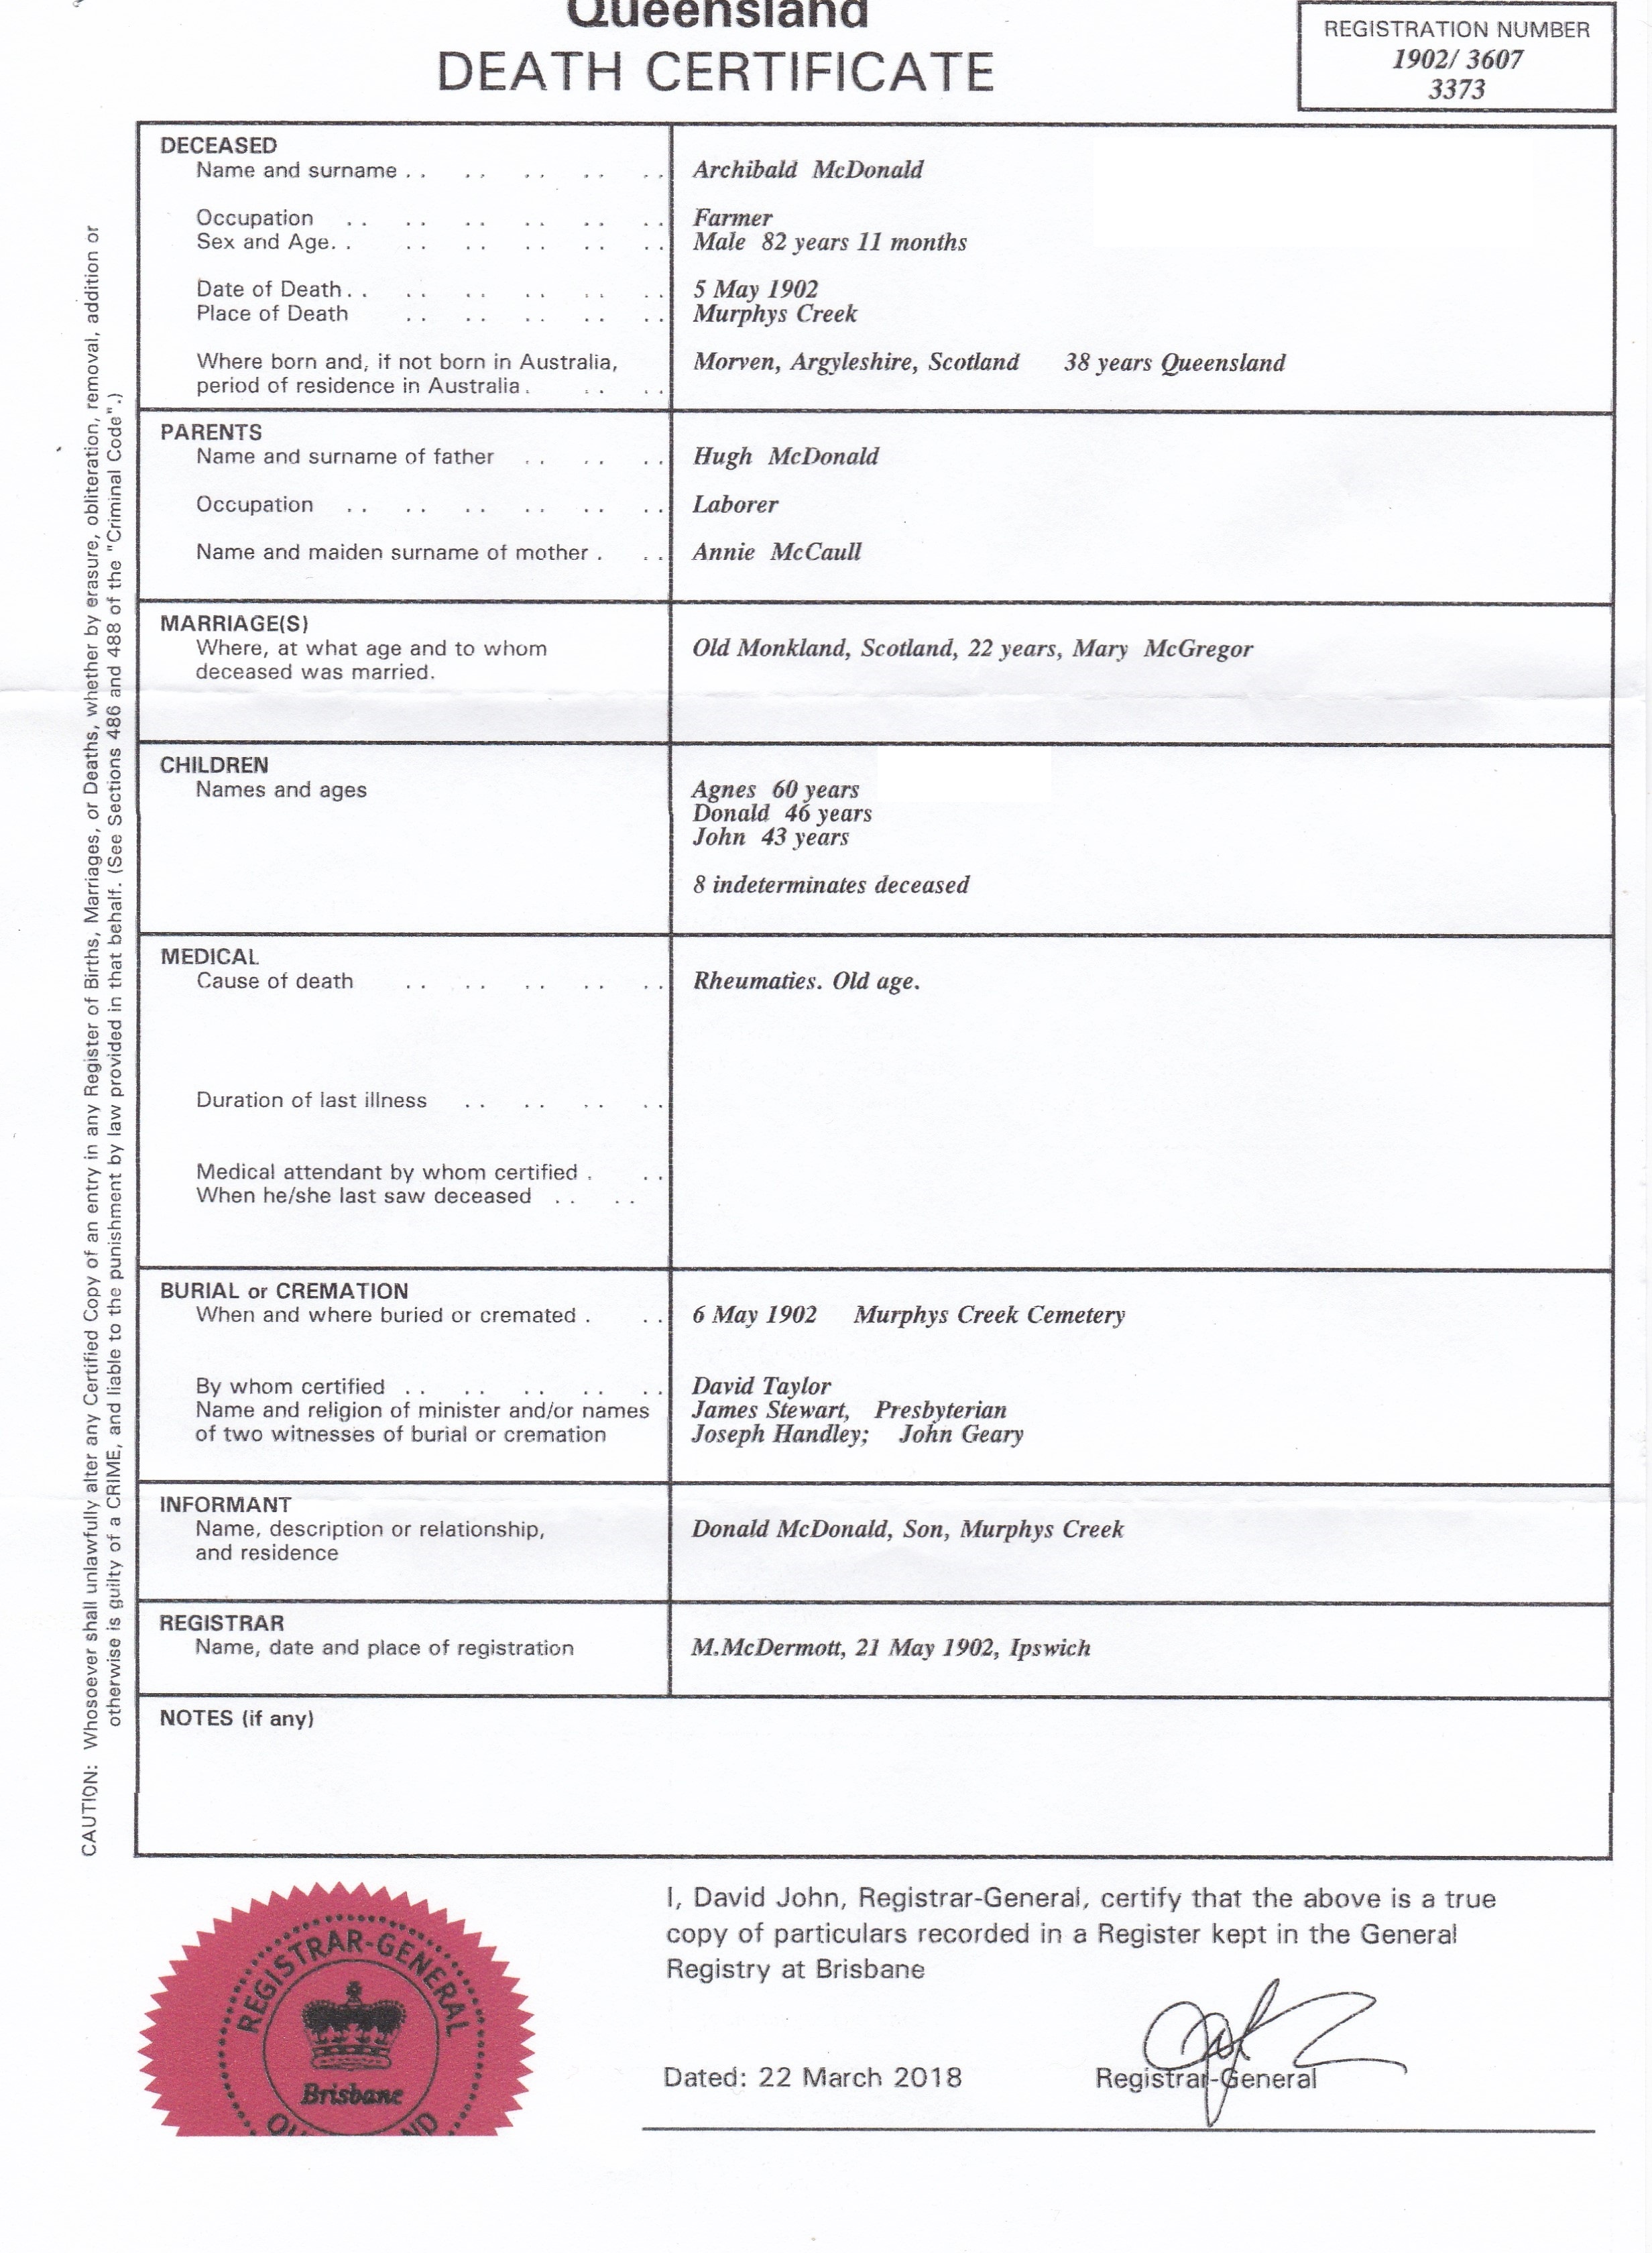 Archibald Mcdonald death certificate, Linked To: <a href='profiles/i663.html' >Archibald McDonald</a>